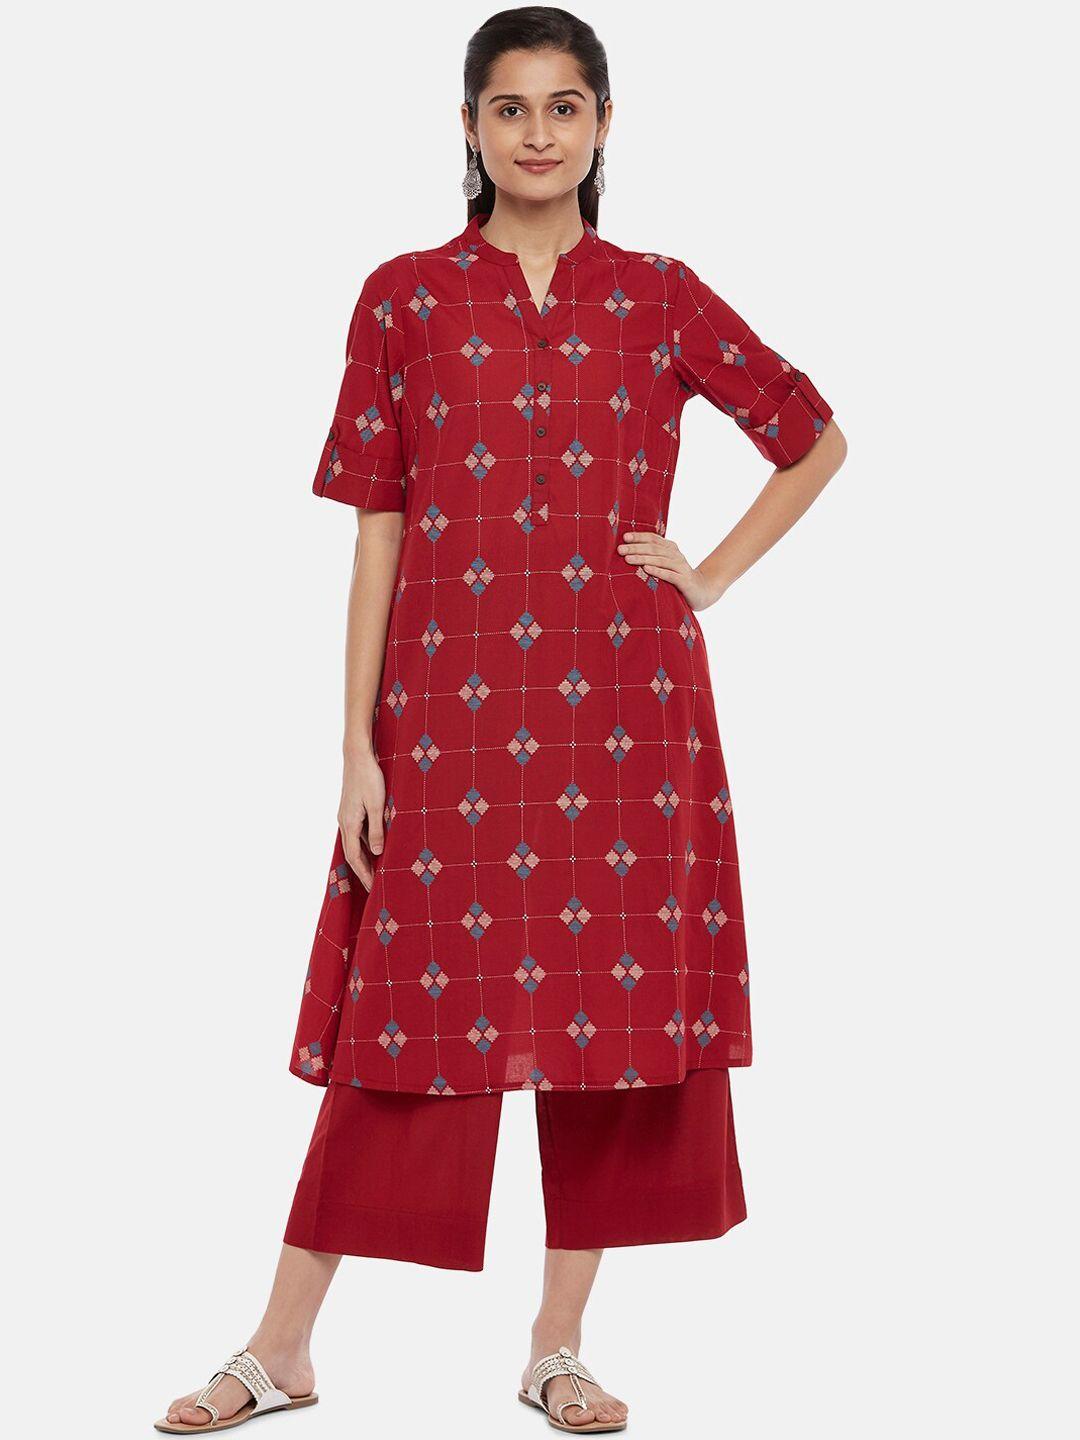 rangmanch by pantaloons women red printed pure cotton kurta set